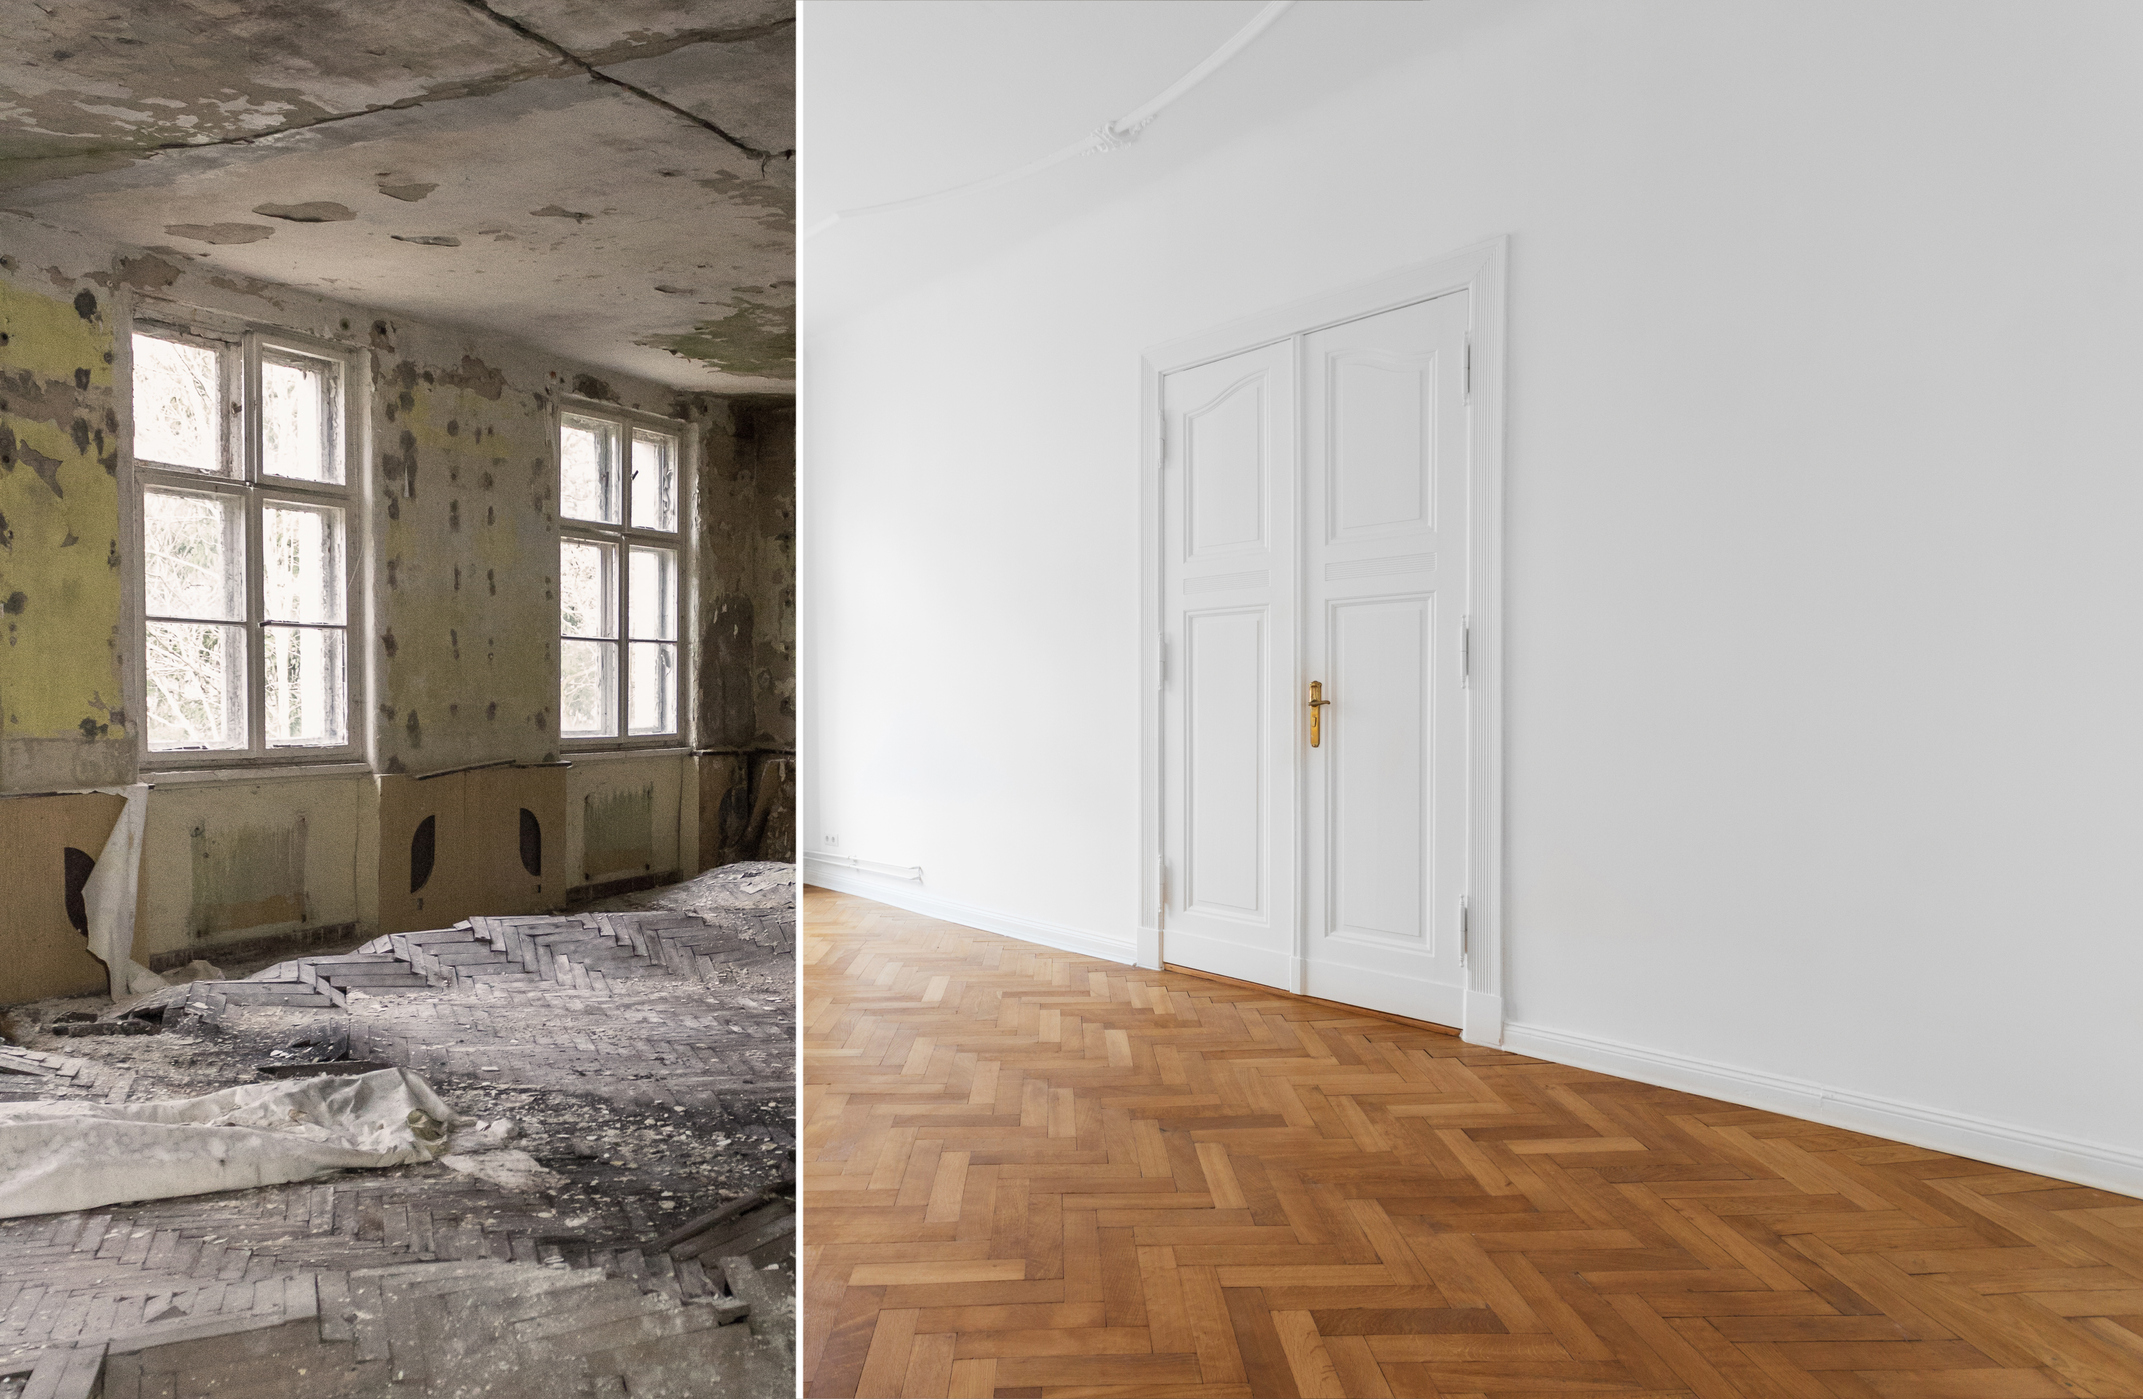 Flat Renovation, Apartment Refurbishment, Room Before And After Modernization